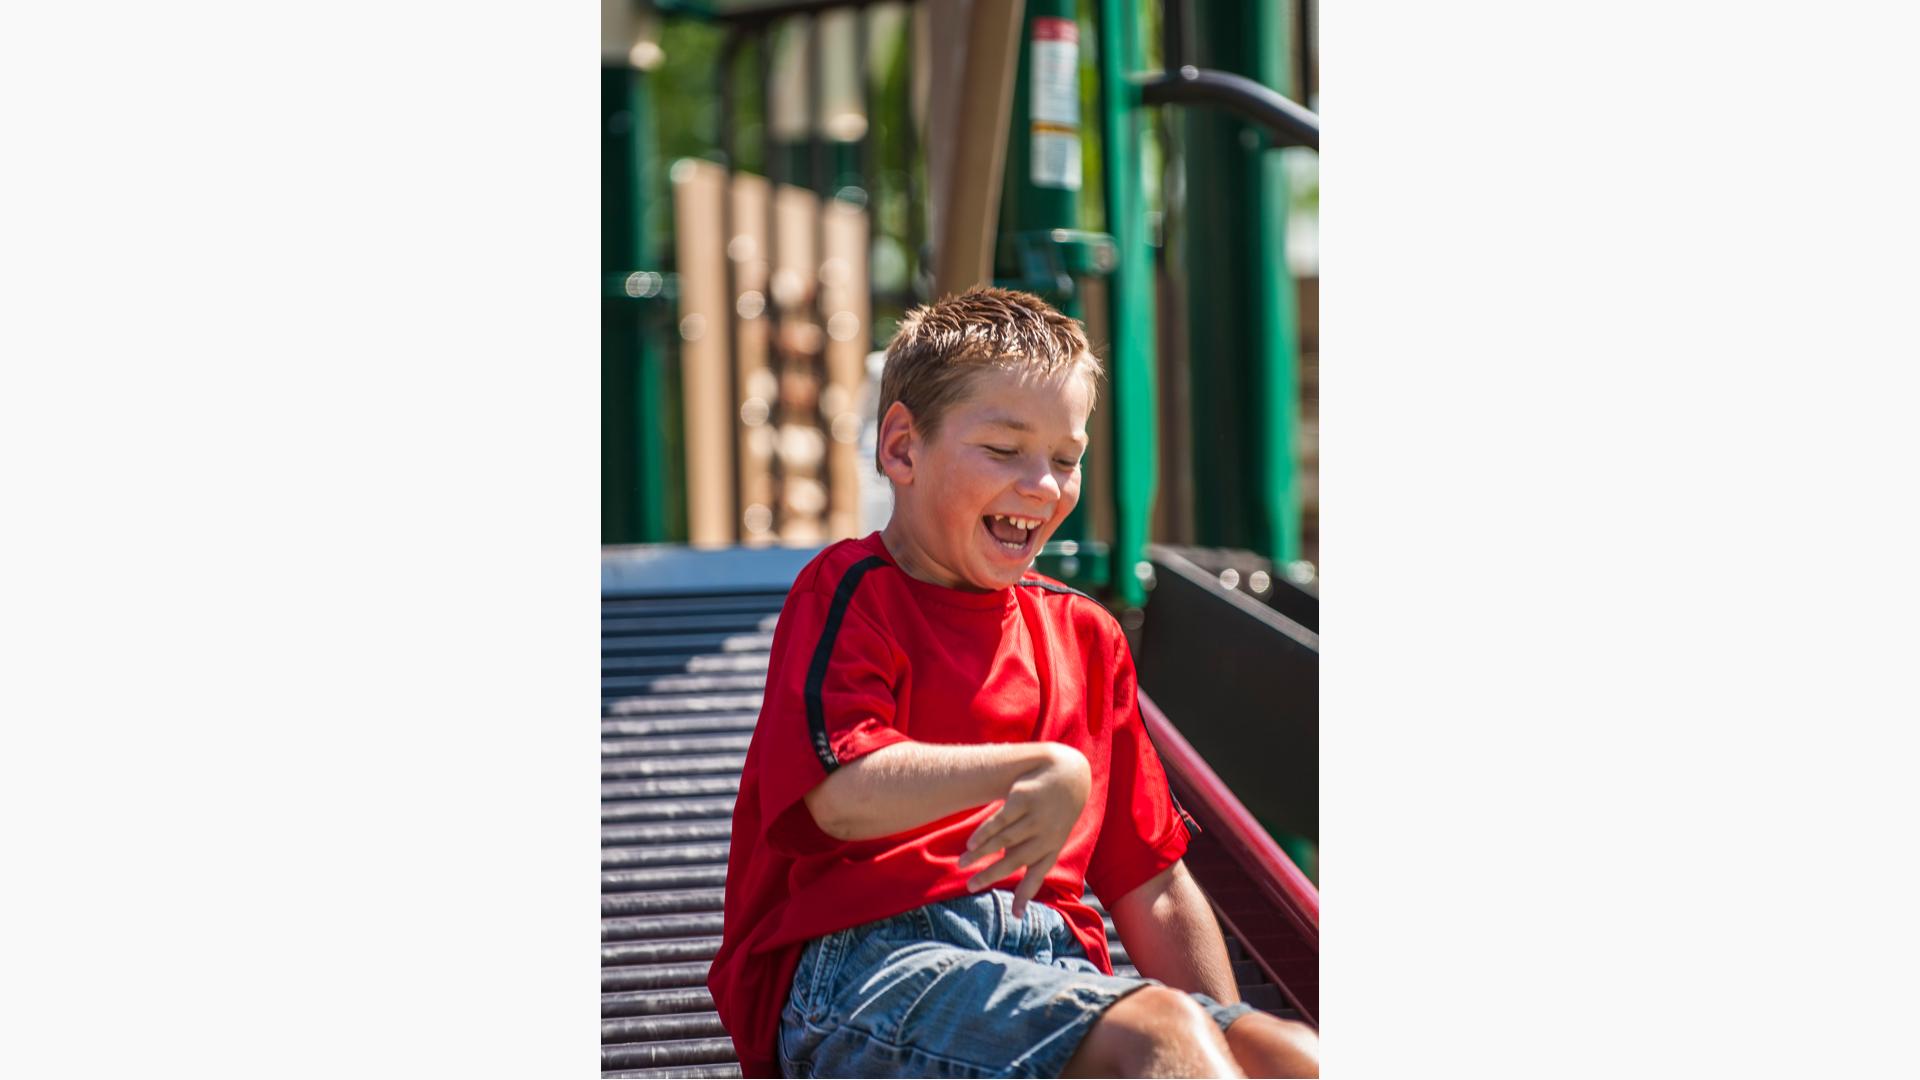 Boy in red shirt sitting on rollerchair